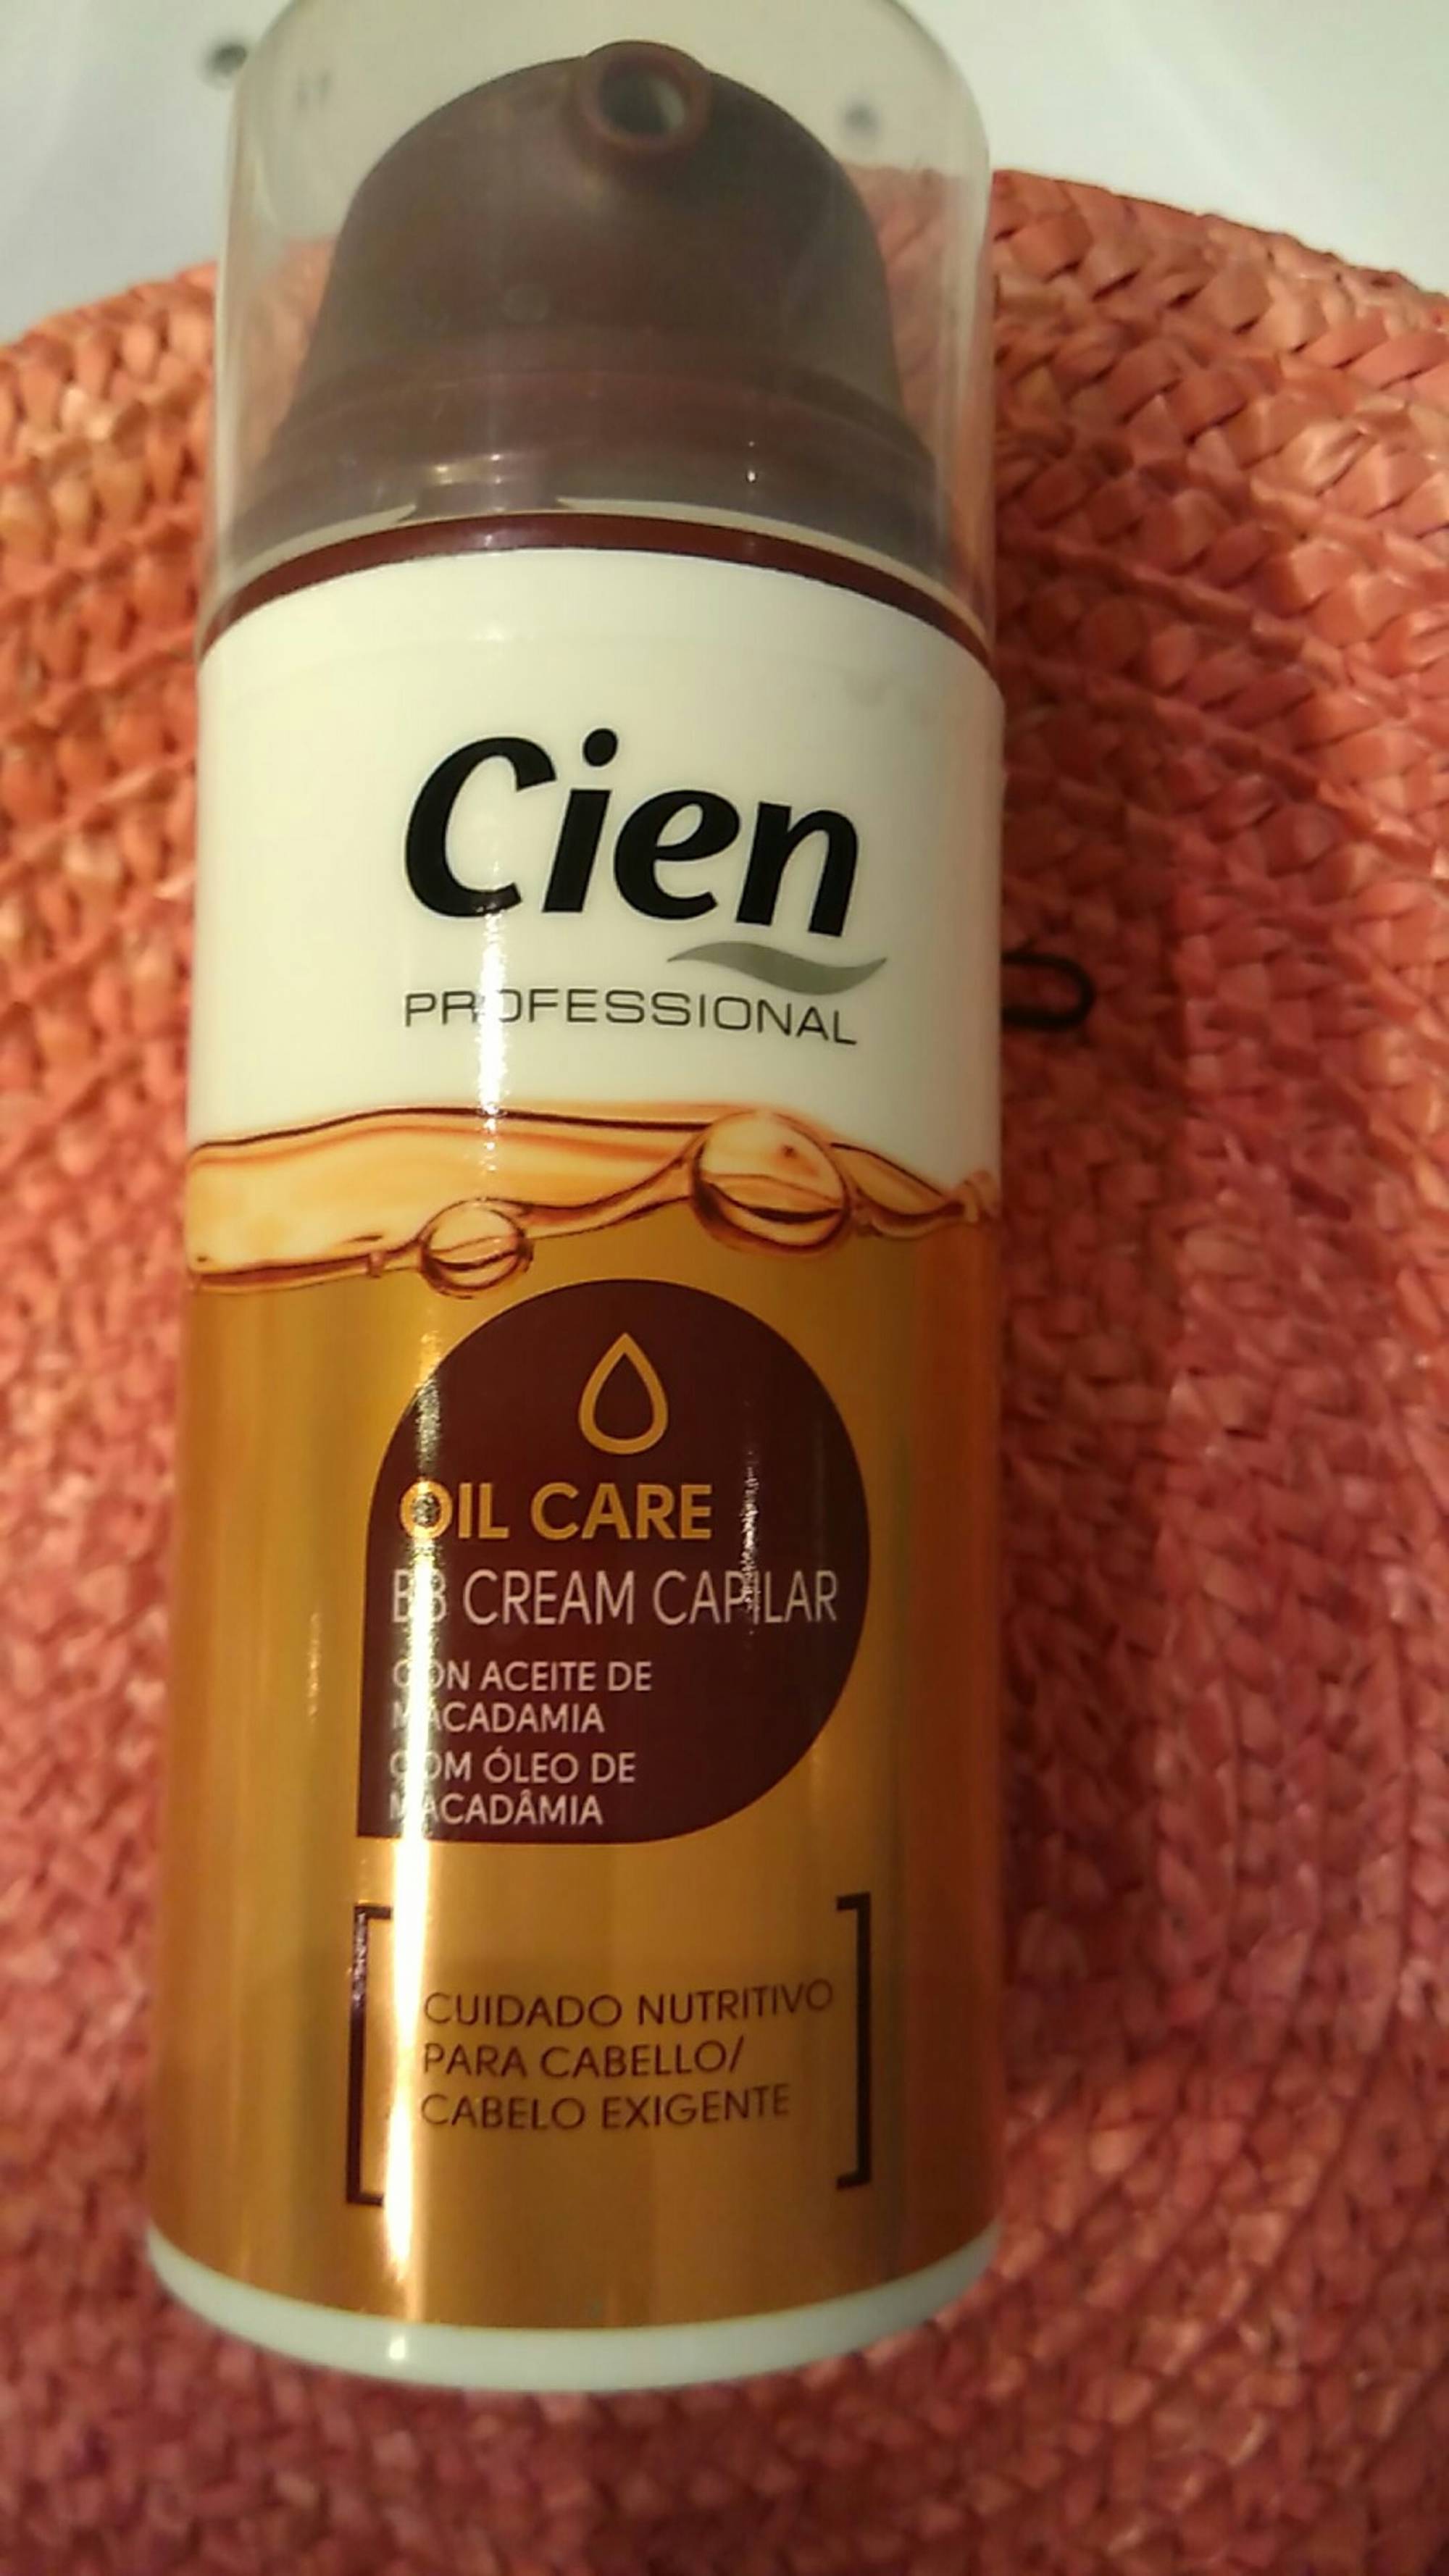 CIEN - Oil care - BB Cream capilar